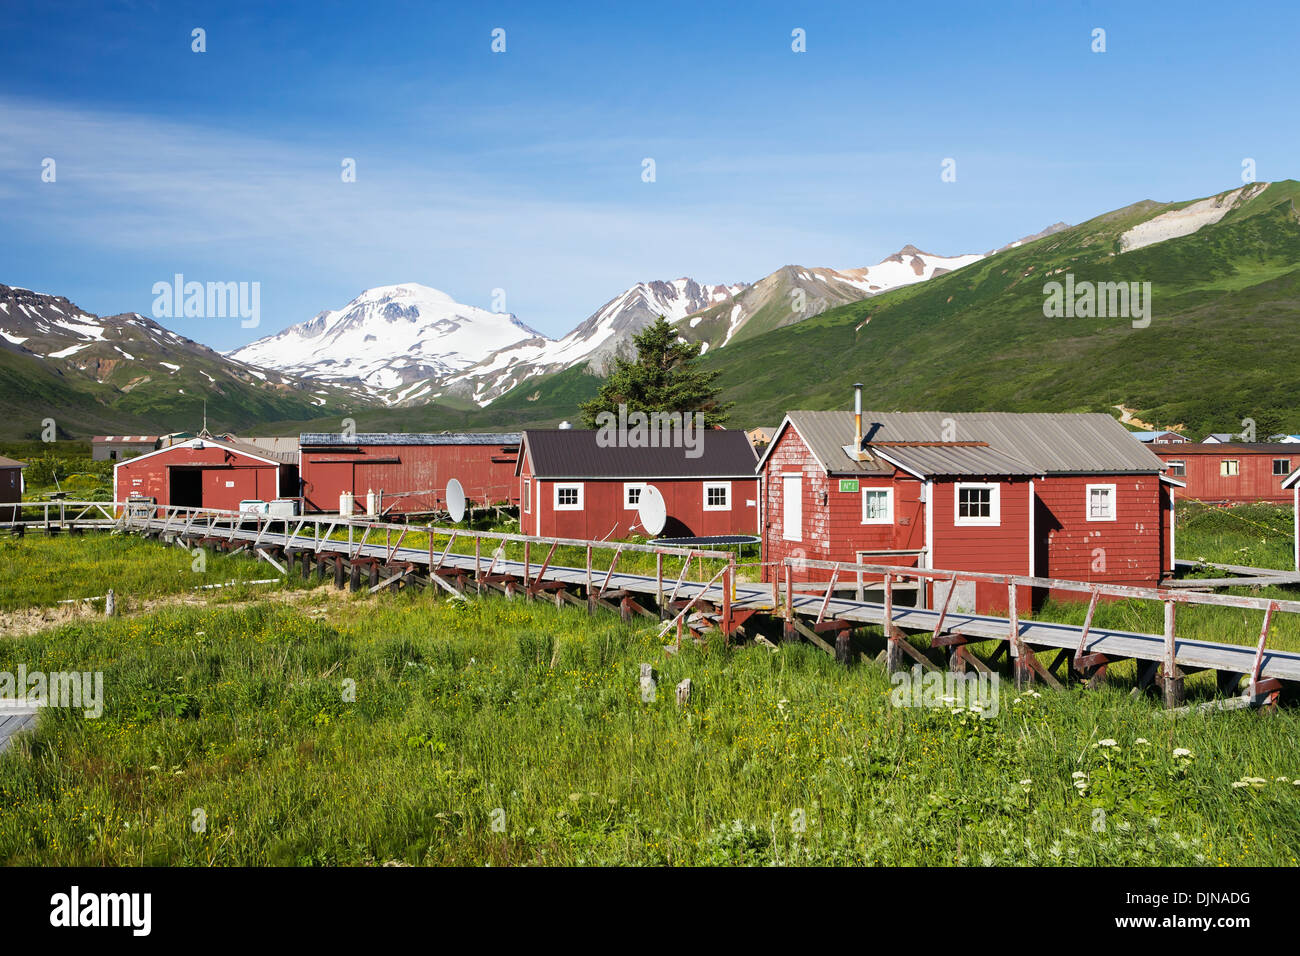 The Town Of False Pass On Unimak Island, The First Of The Aleutian Island Chain, Southwest Alaska, Summer. Stock Photo